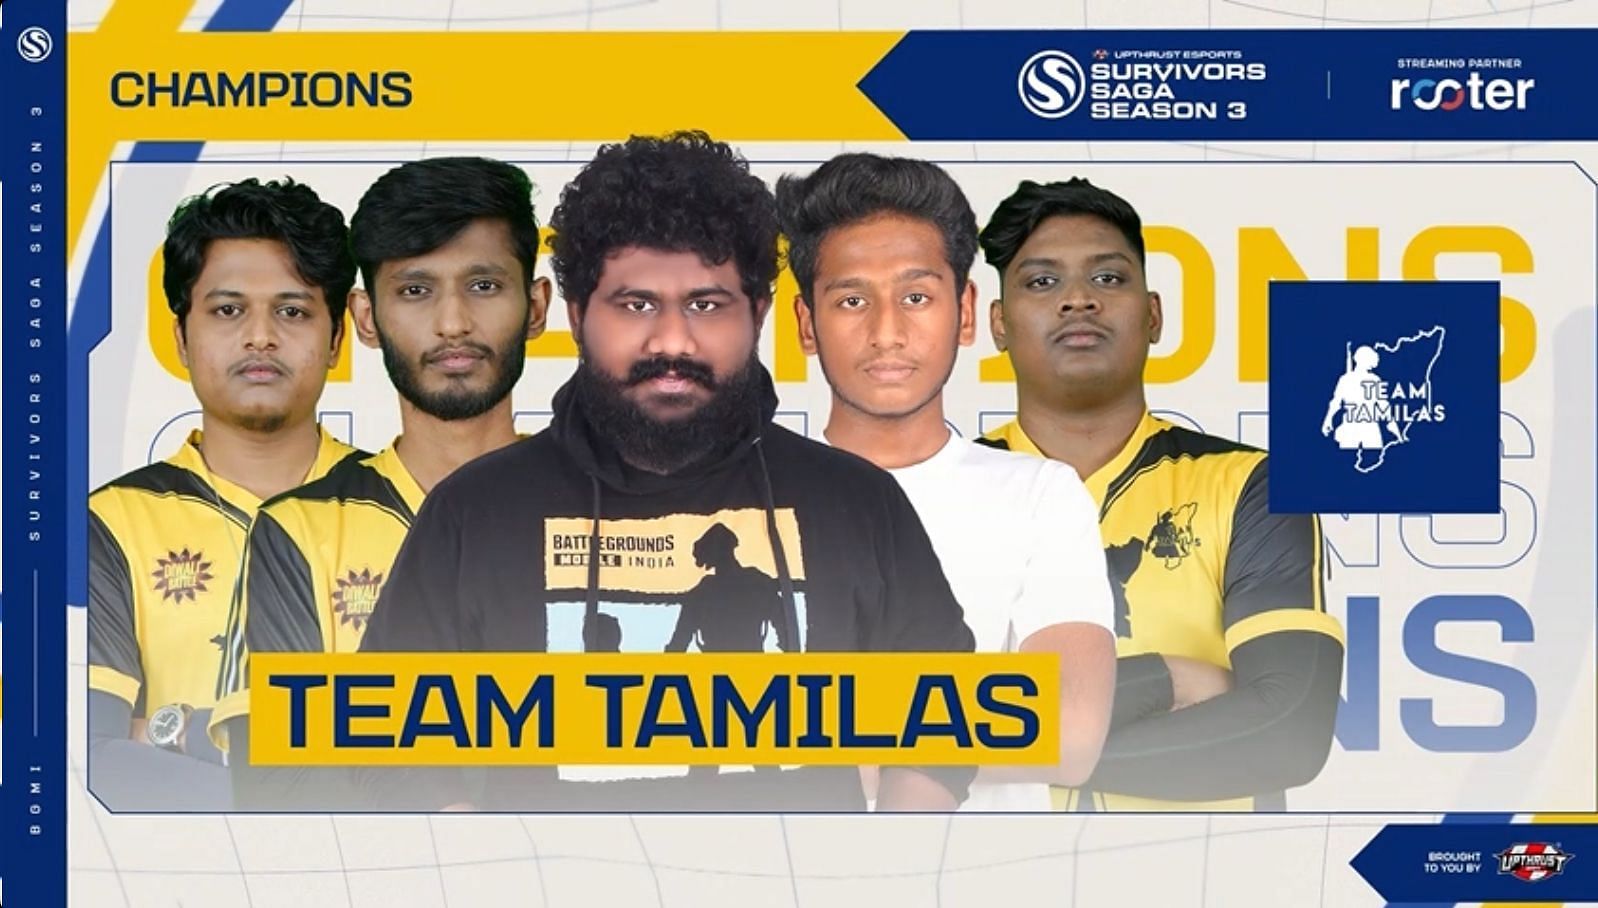 Team Tamilas clinched BGMI Survivors Saga Season 3 (Image via Upthrust Esports )